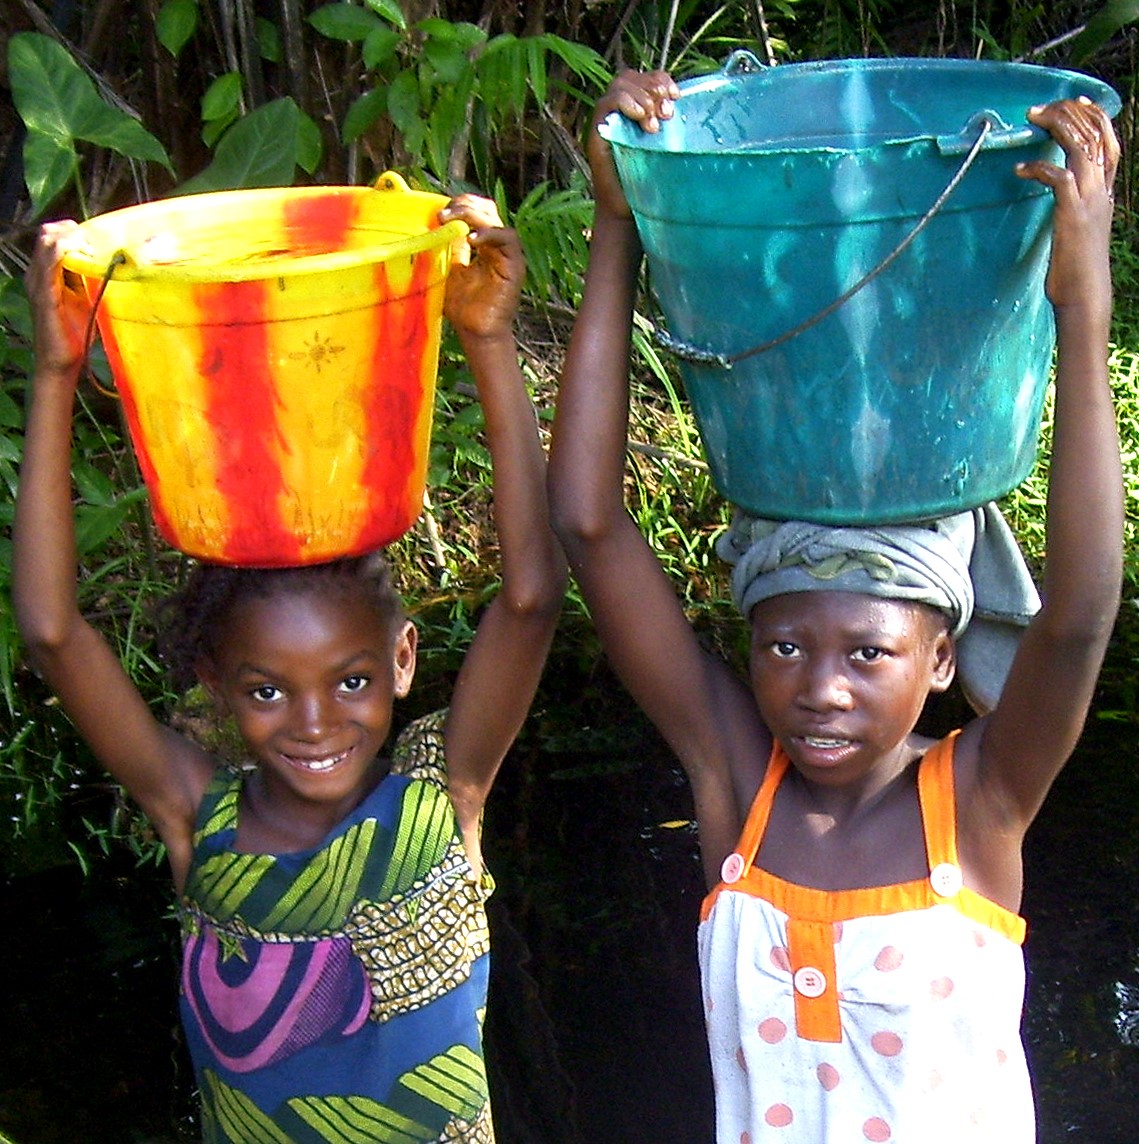 Impact Photo - Girls + buckets - Liberia.jpg 408 KB